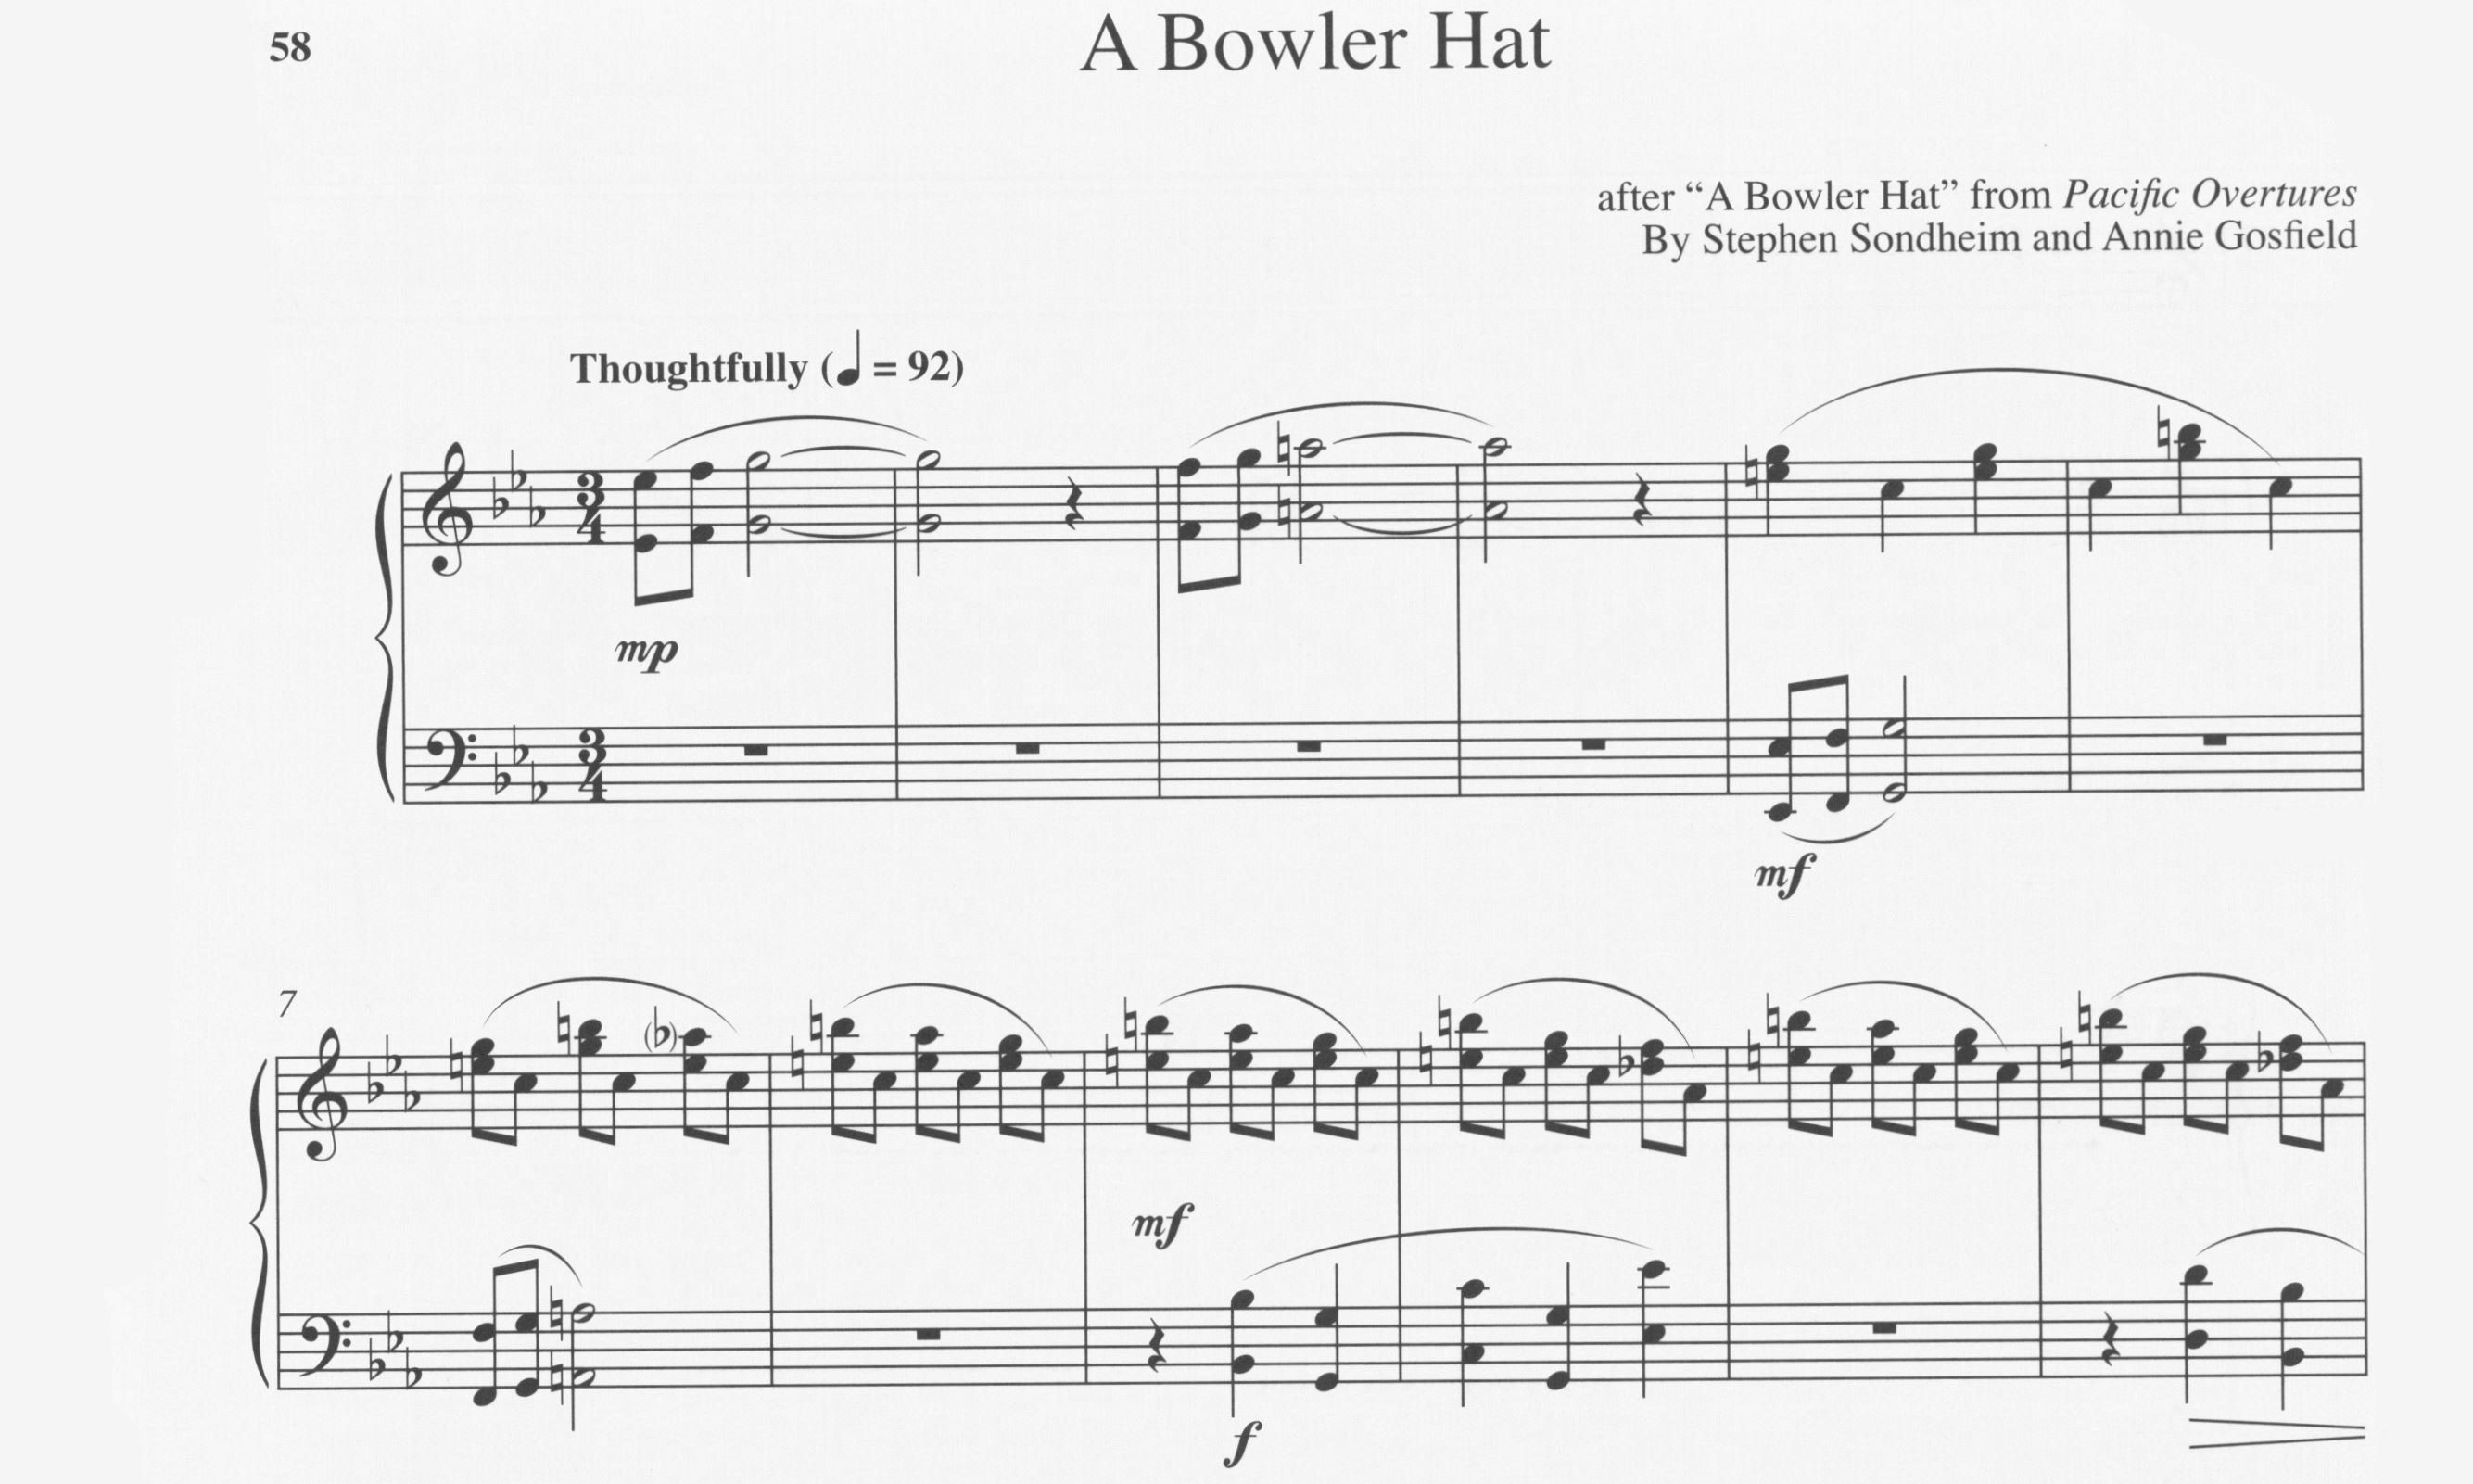 Gosfield, Annie - A Bowler Hat